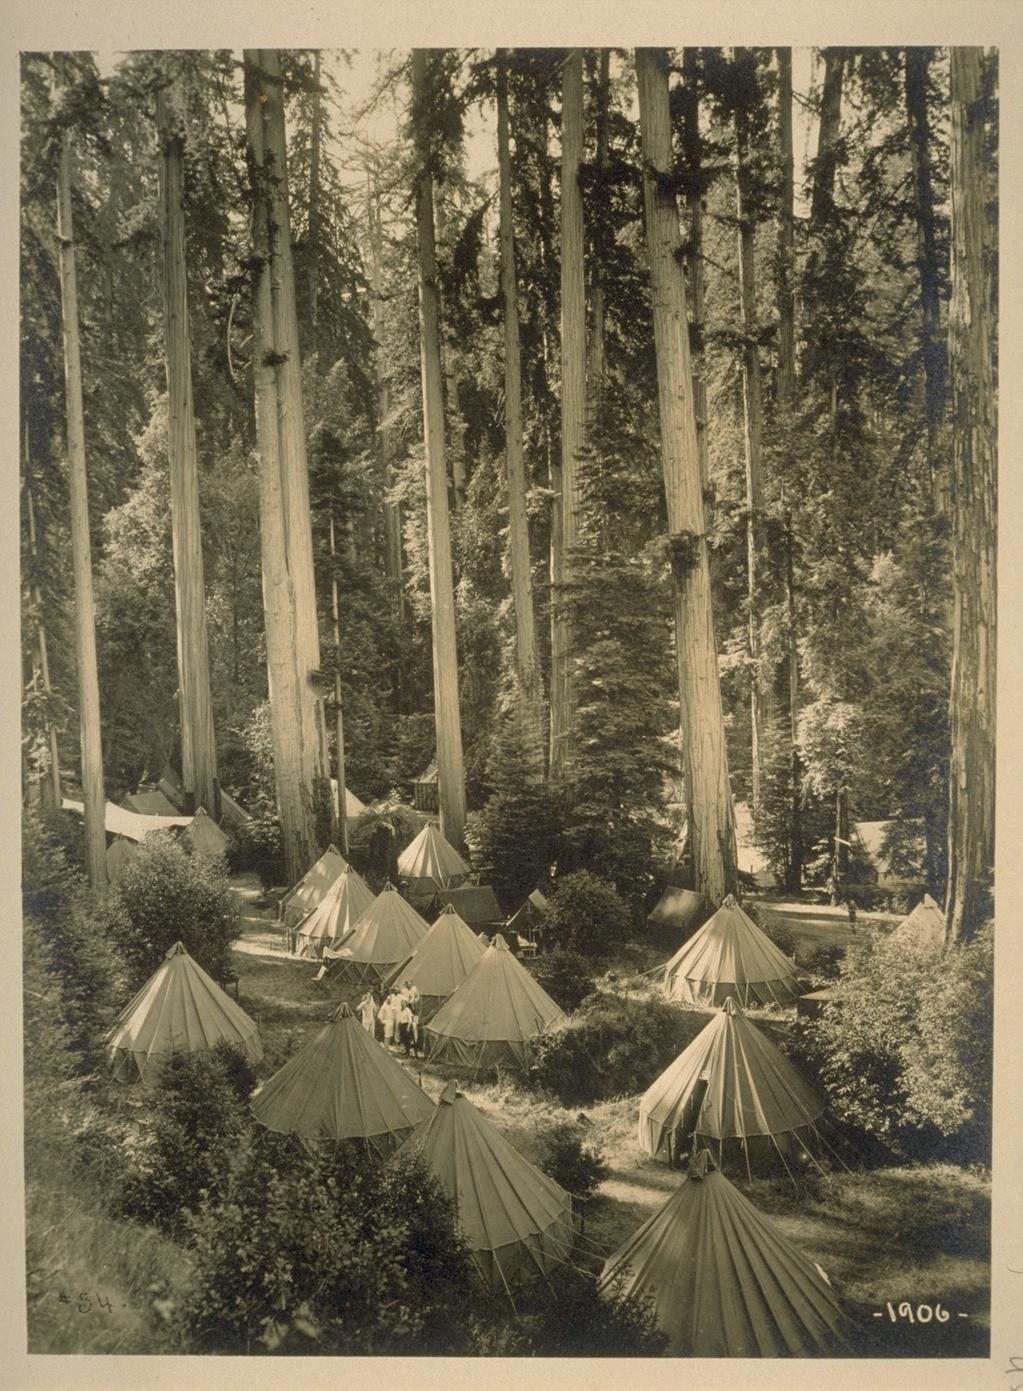 A 1909 photograph of the Bohemian Grove campsite in Monte Rio, California